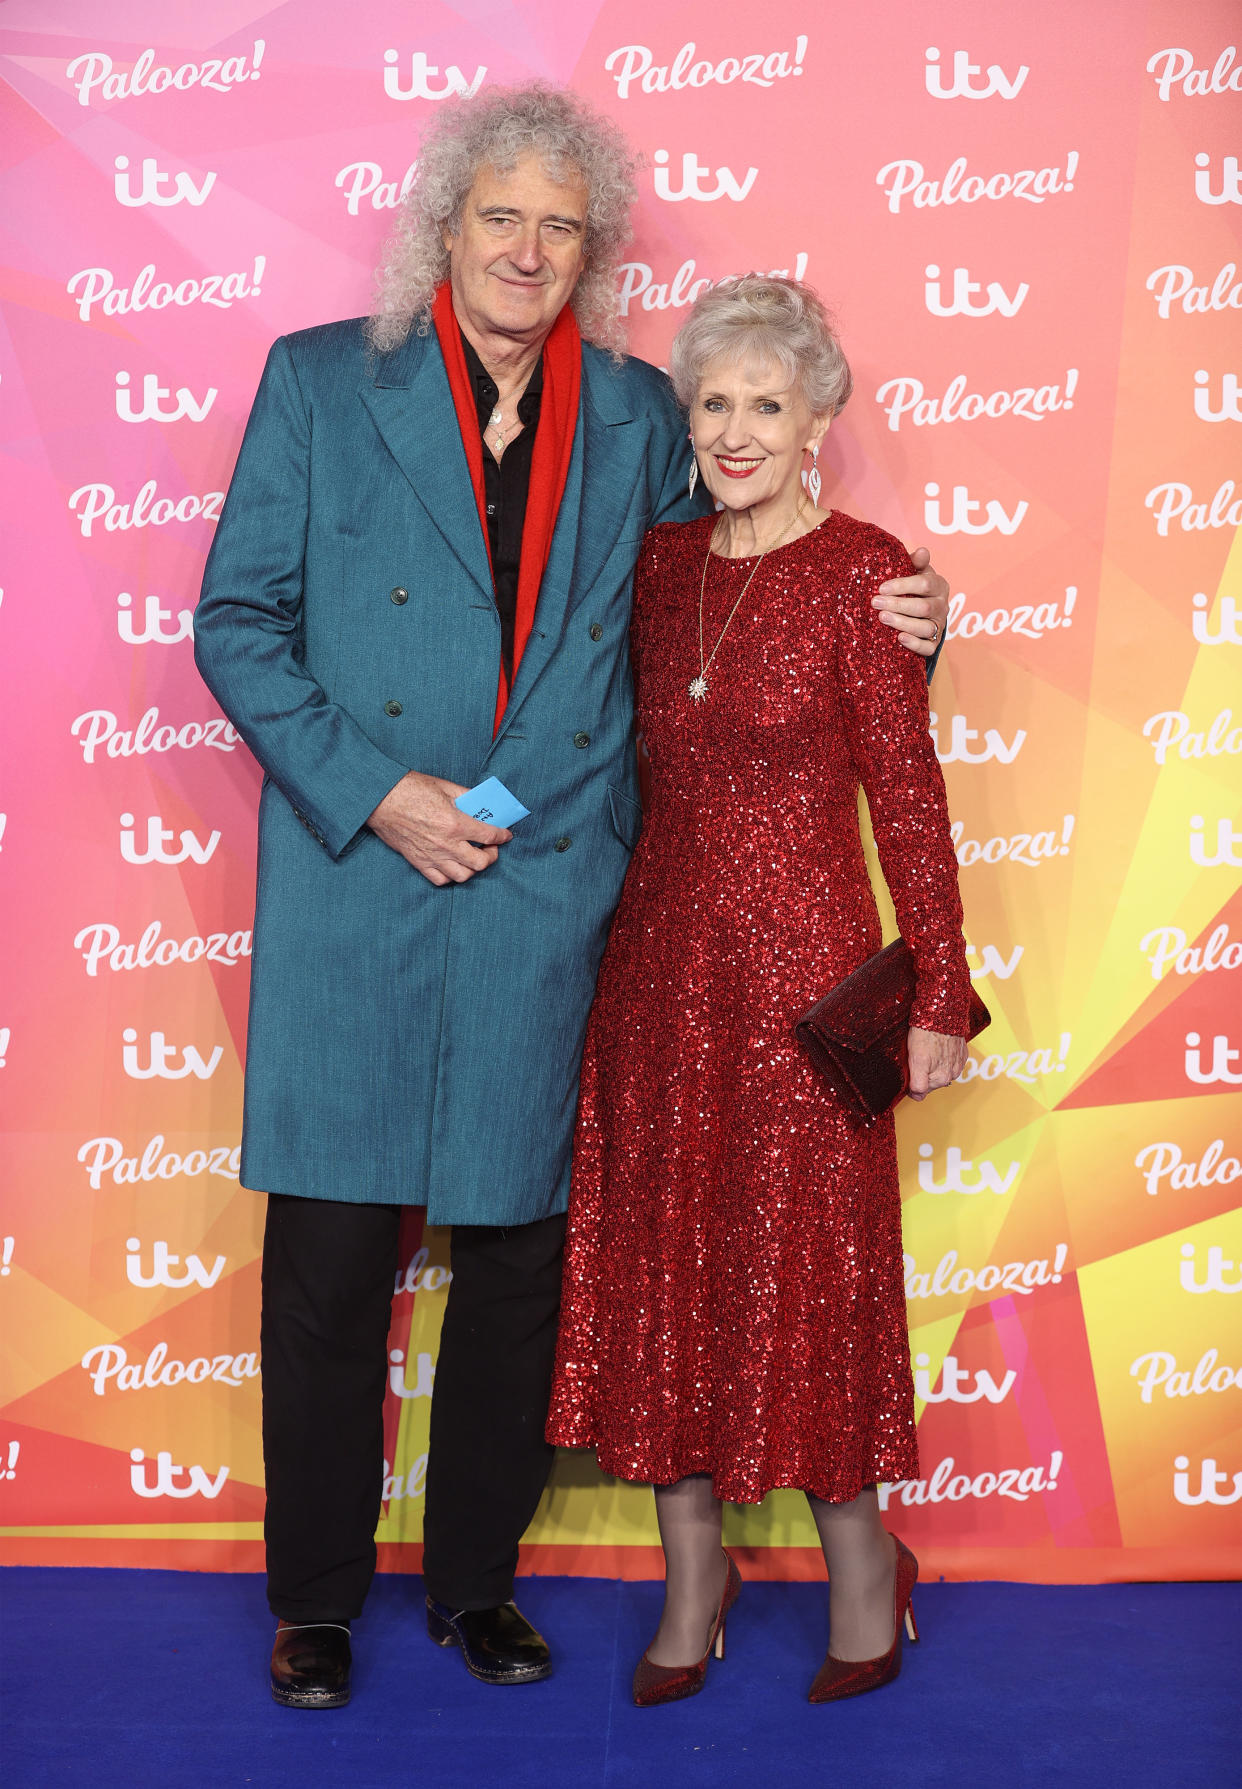 LONDON, ENGLAND - NOVEMBER 23: Brian May and Anita Dobson attend ITV Palooza! at The Royal Festival Hall on November 23, 2021 in London, England. (Photo by Mike Marsland/WireImage)